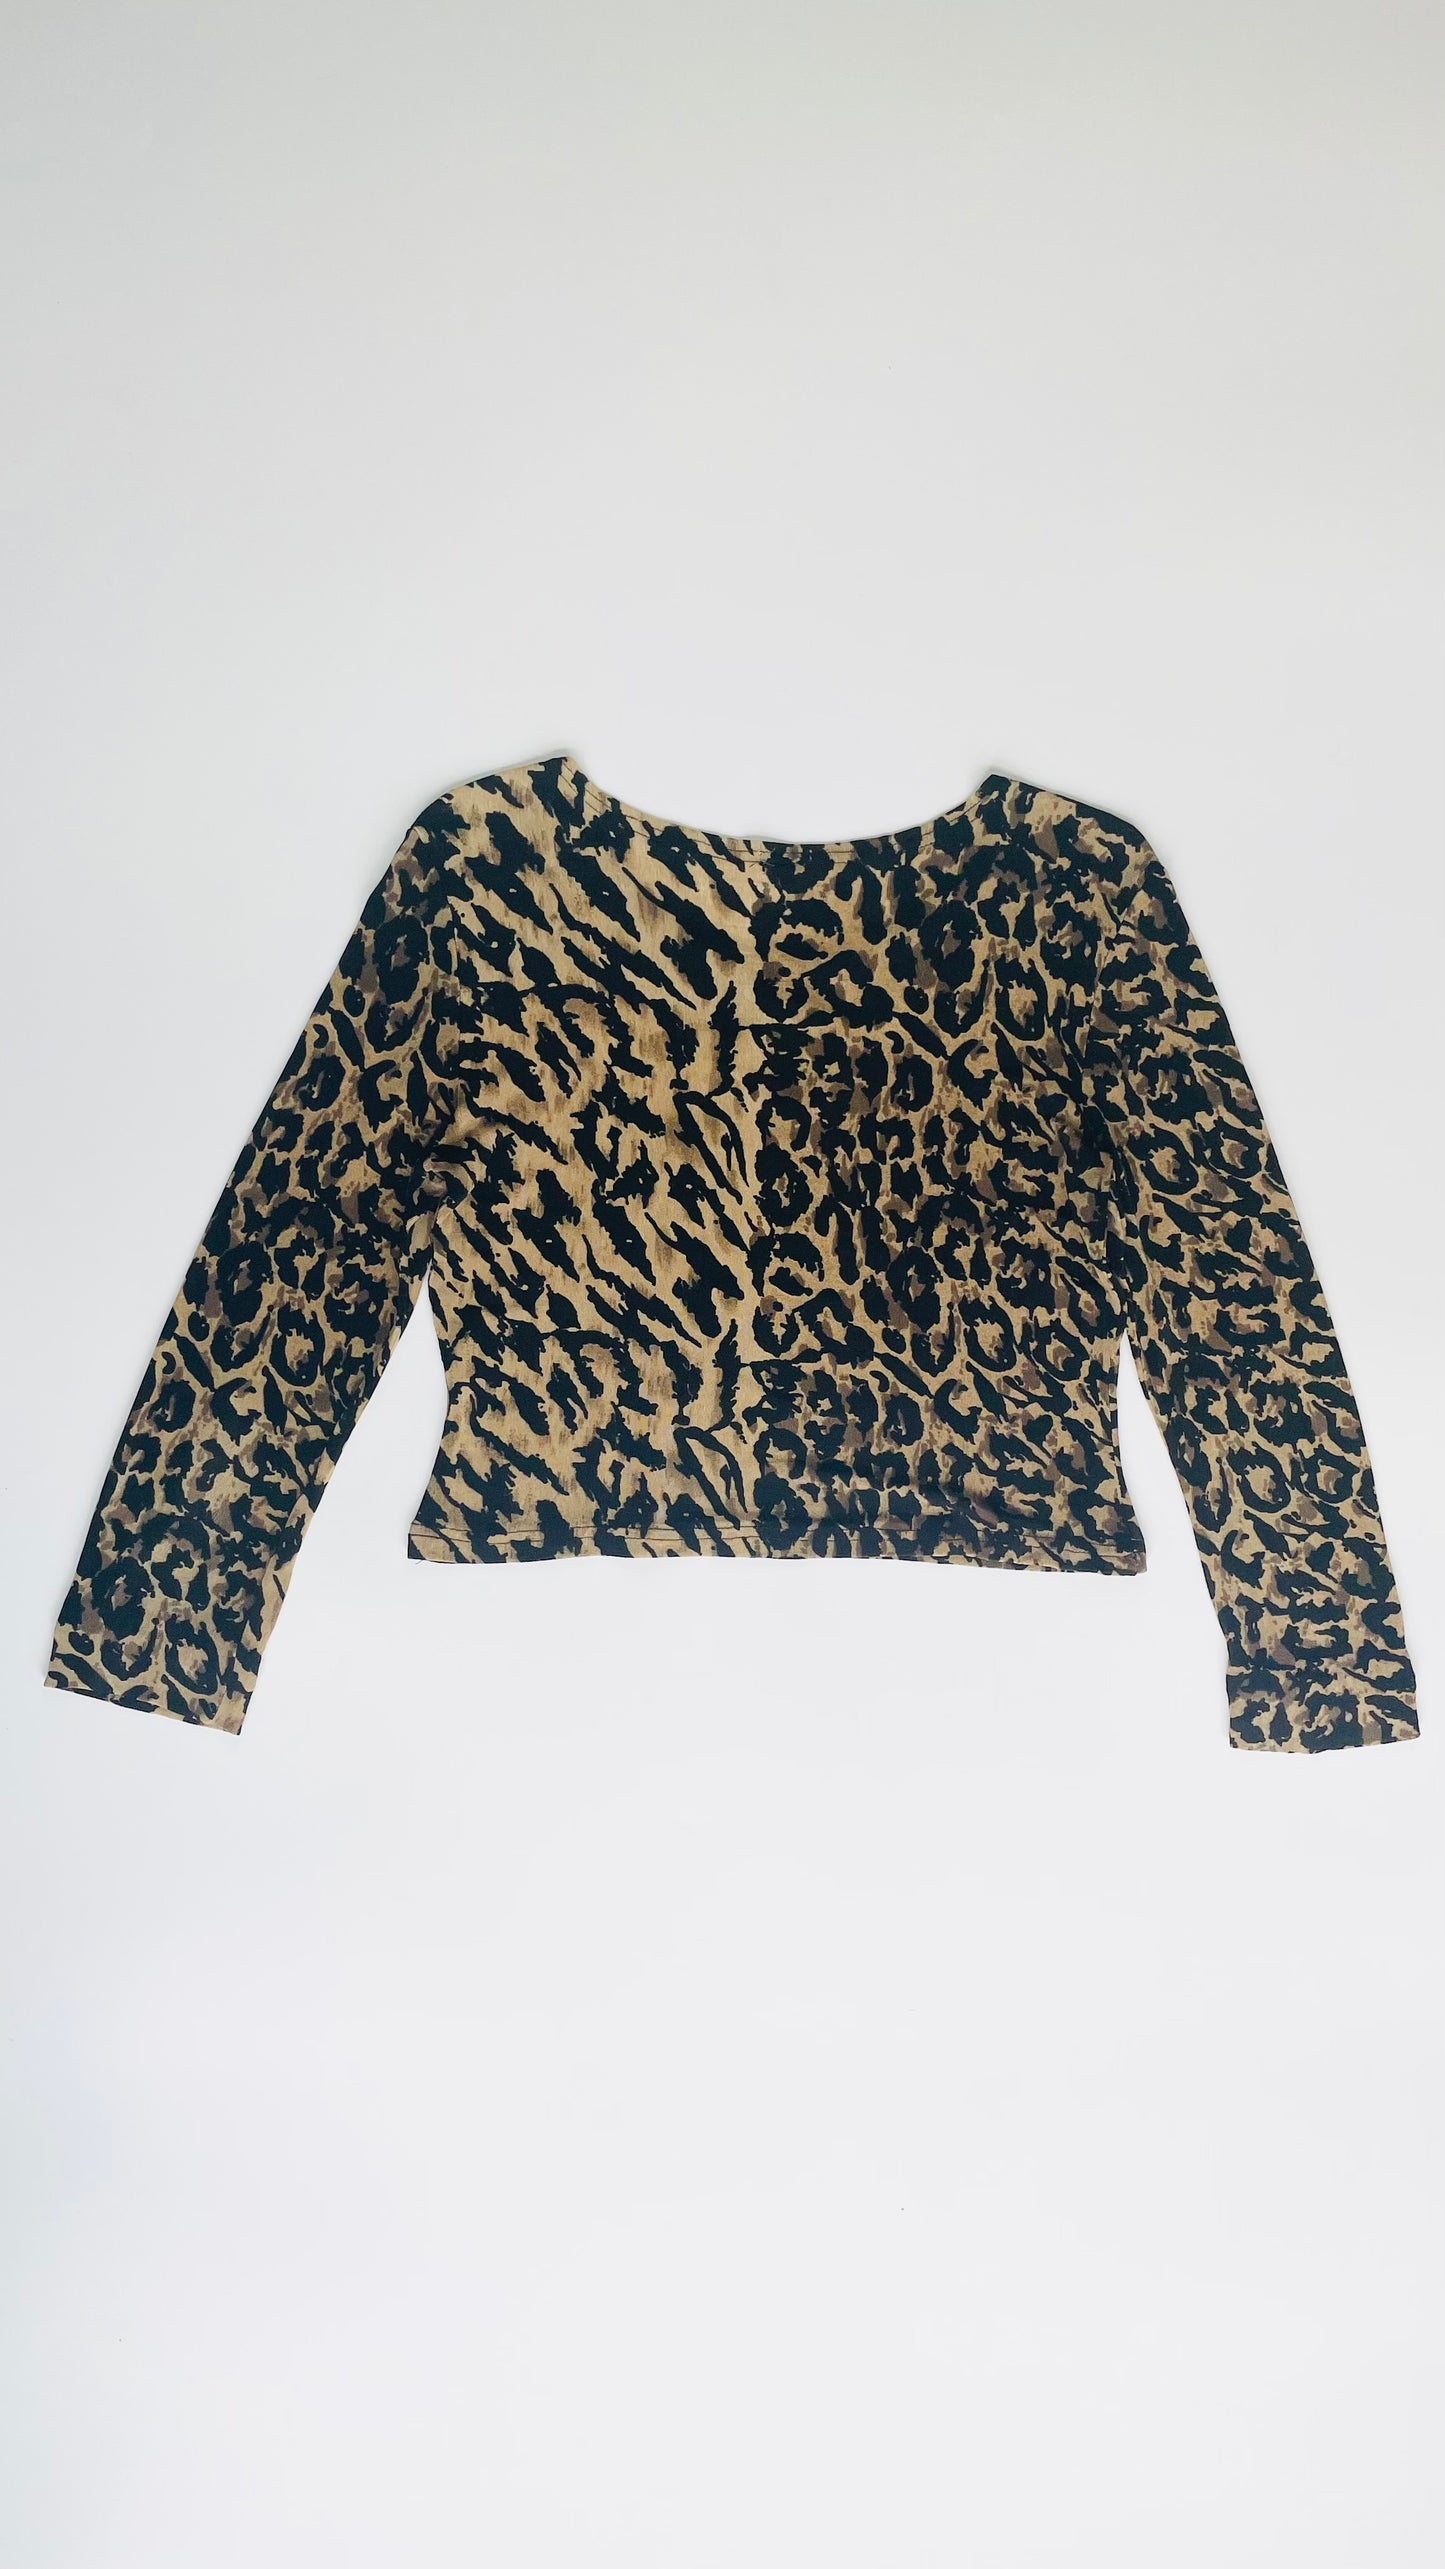 Vintage 90s slinky leopard print top - Size S